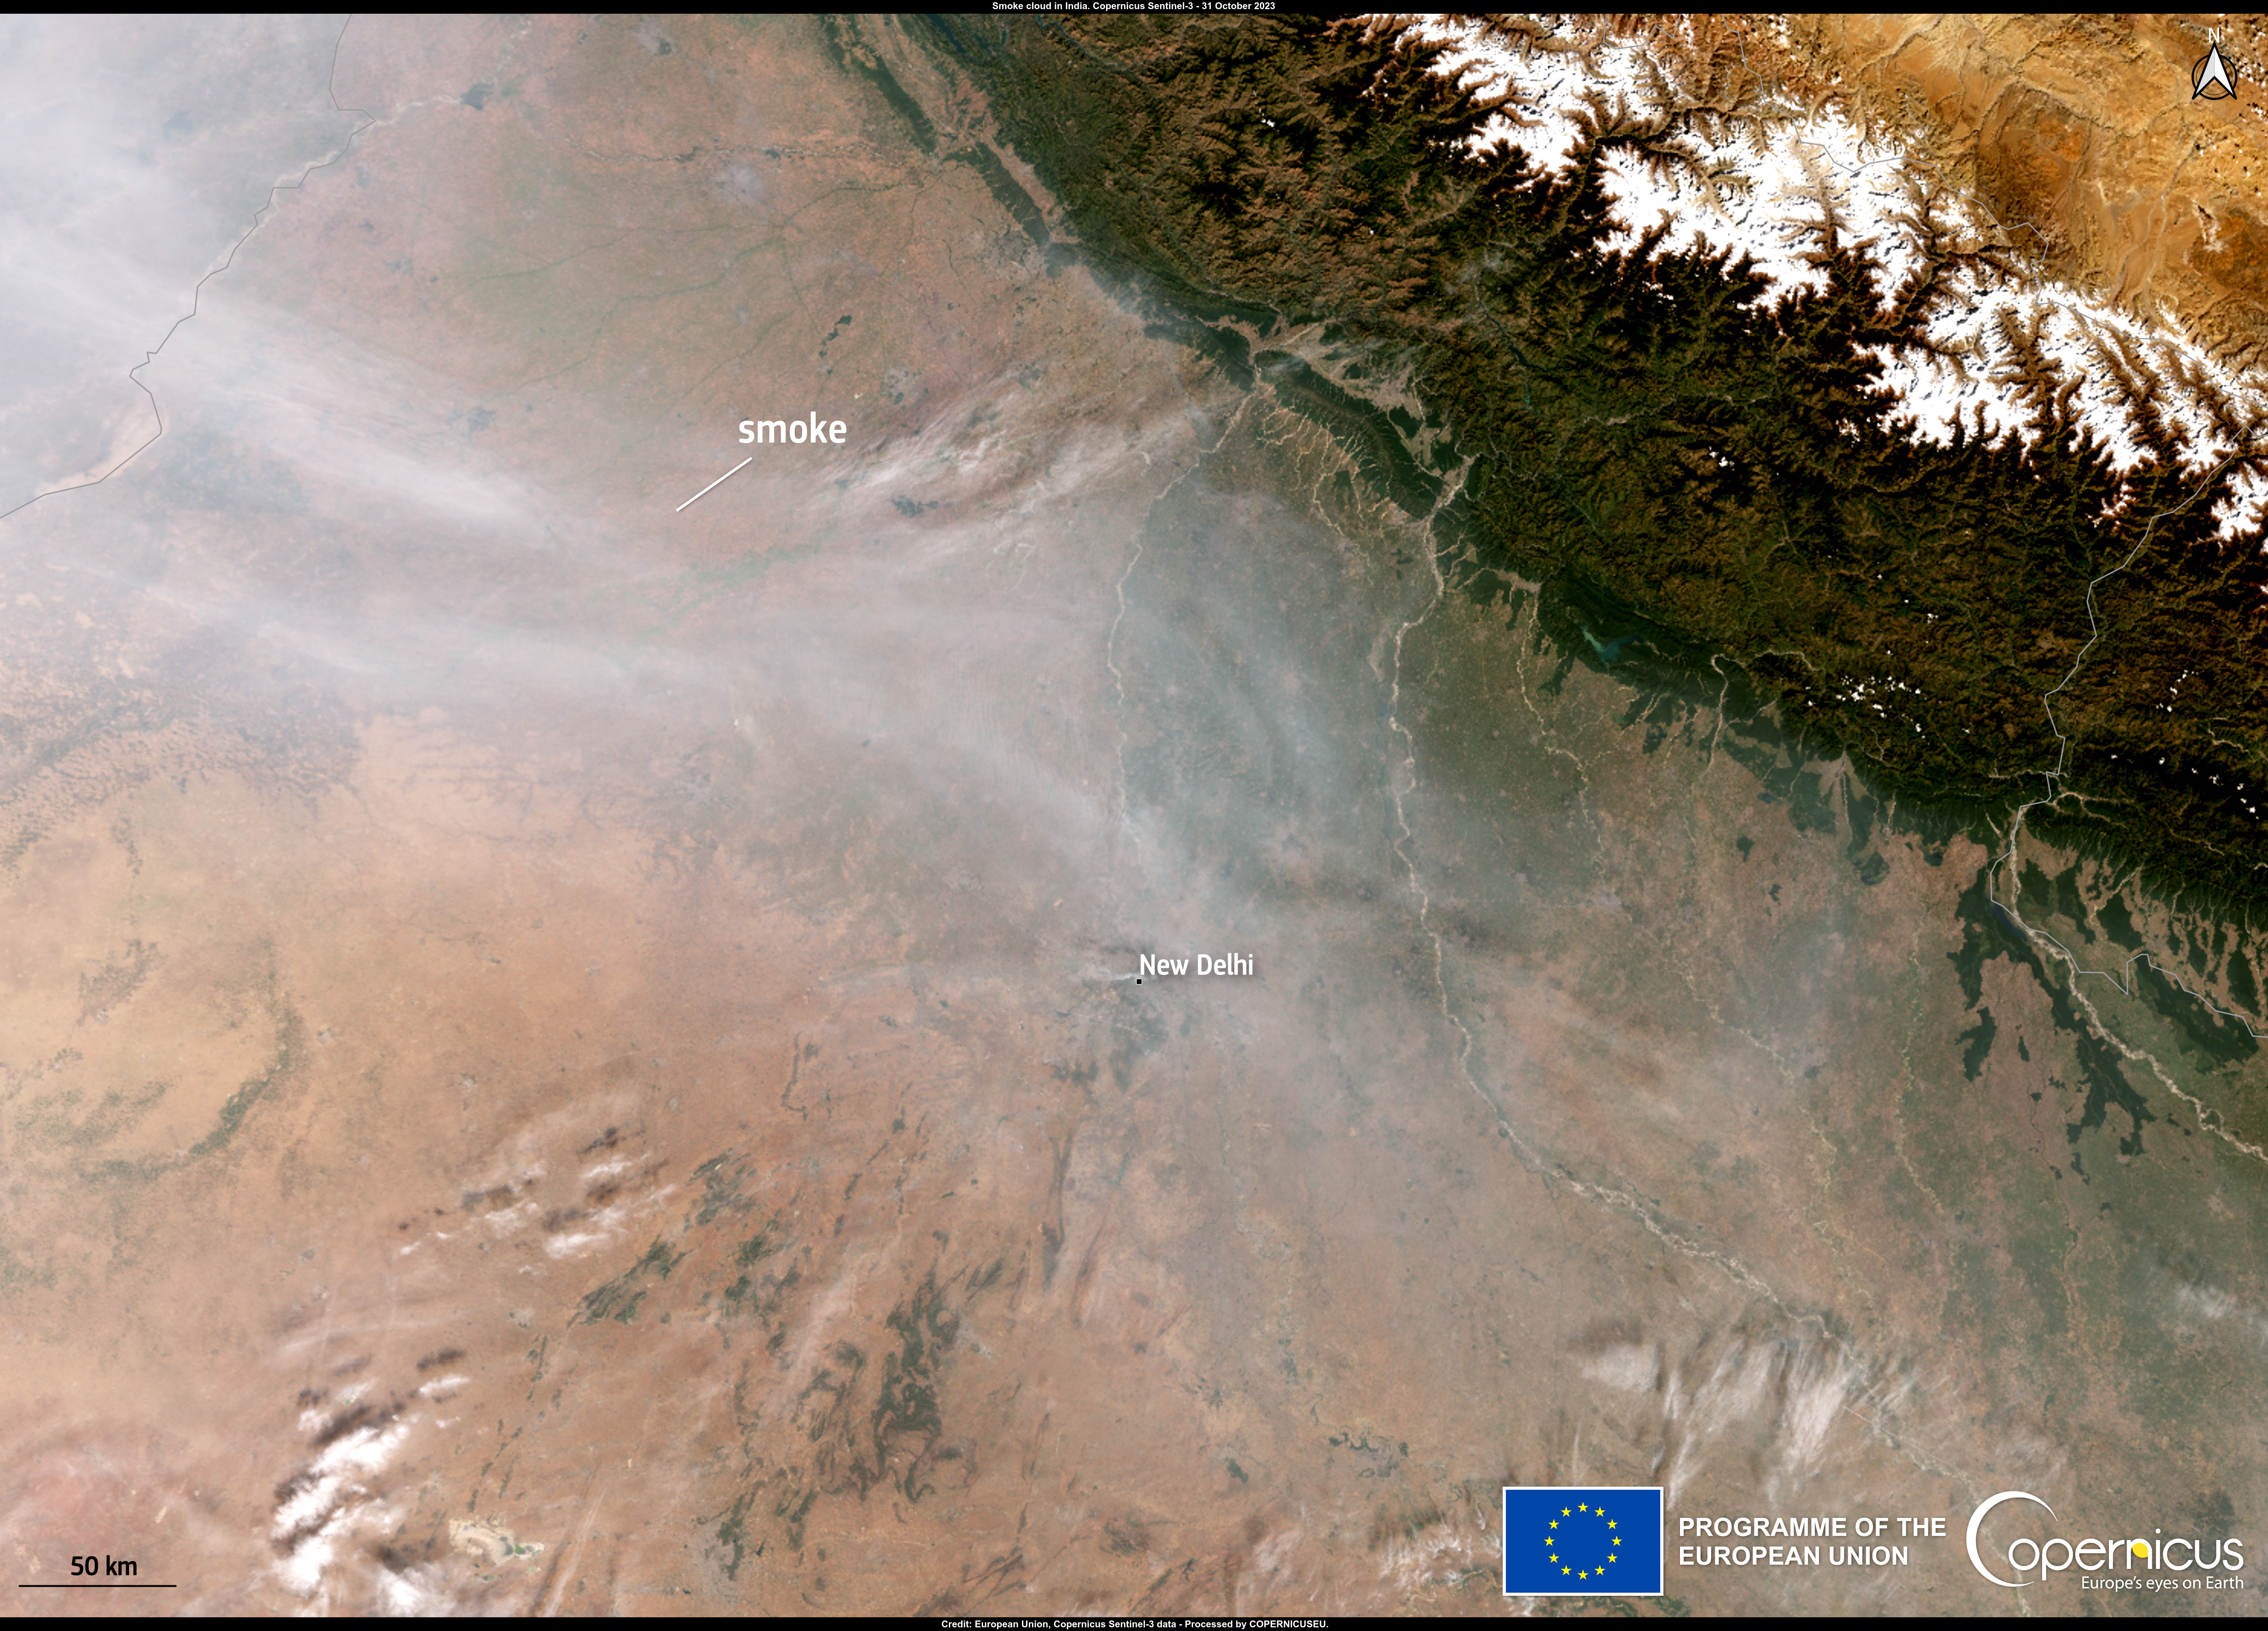 Satellite image shows thick smog covering Delhi